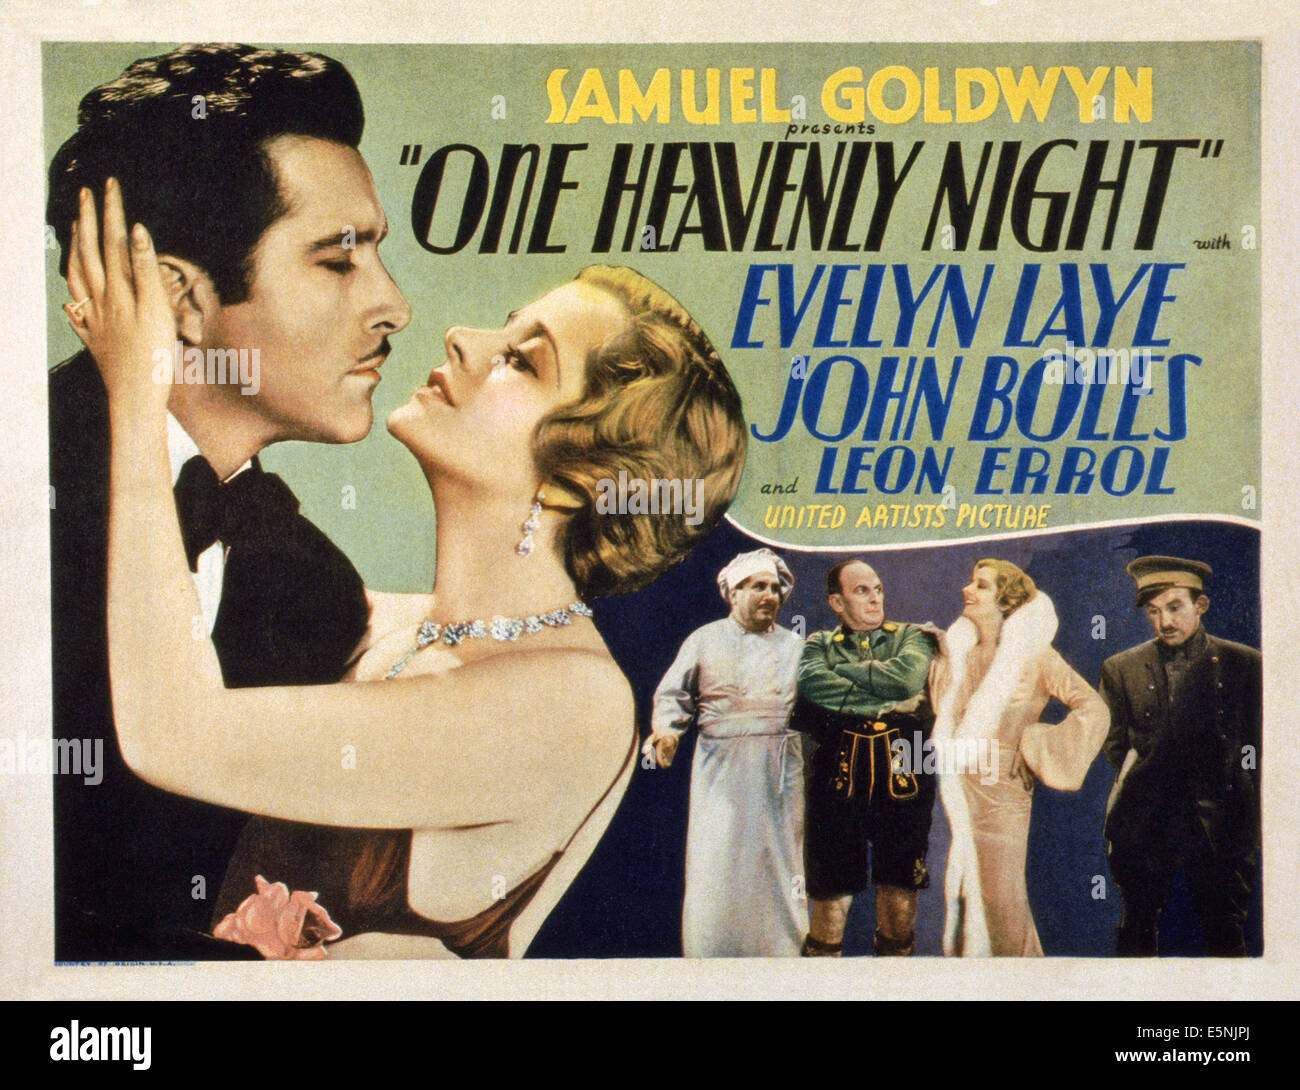 ONE HEAVENLY NIGHT, US lobbycard, John Boles (left), Evelyn Laye (second left)), Leon Errol (third right), 1931 Stock Photo